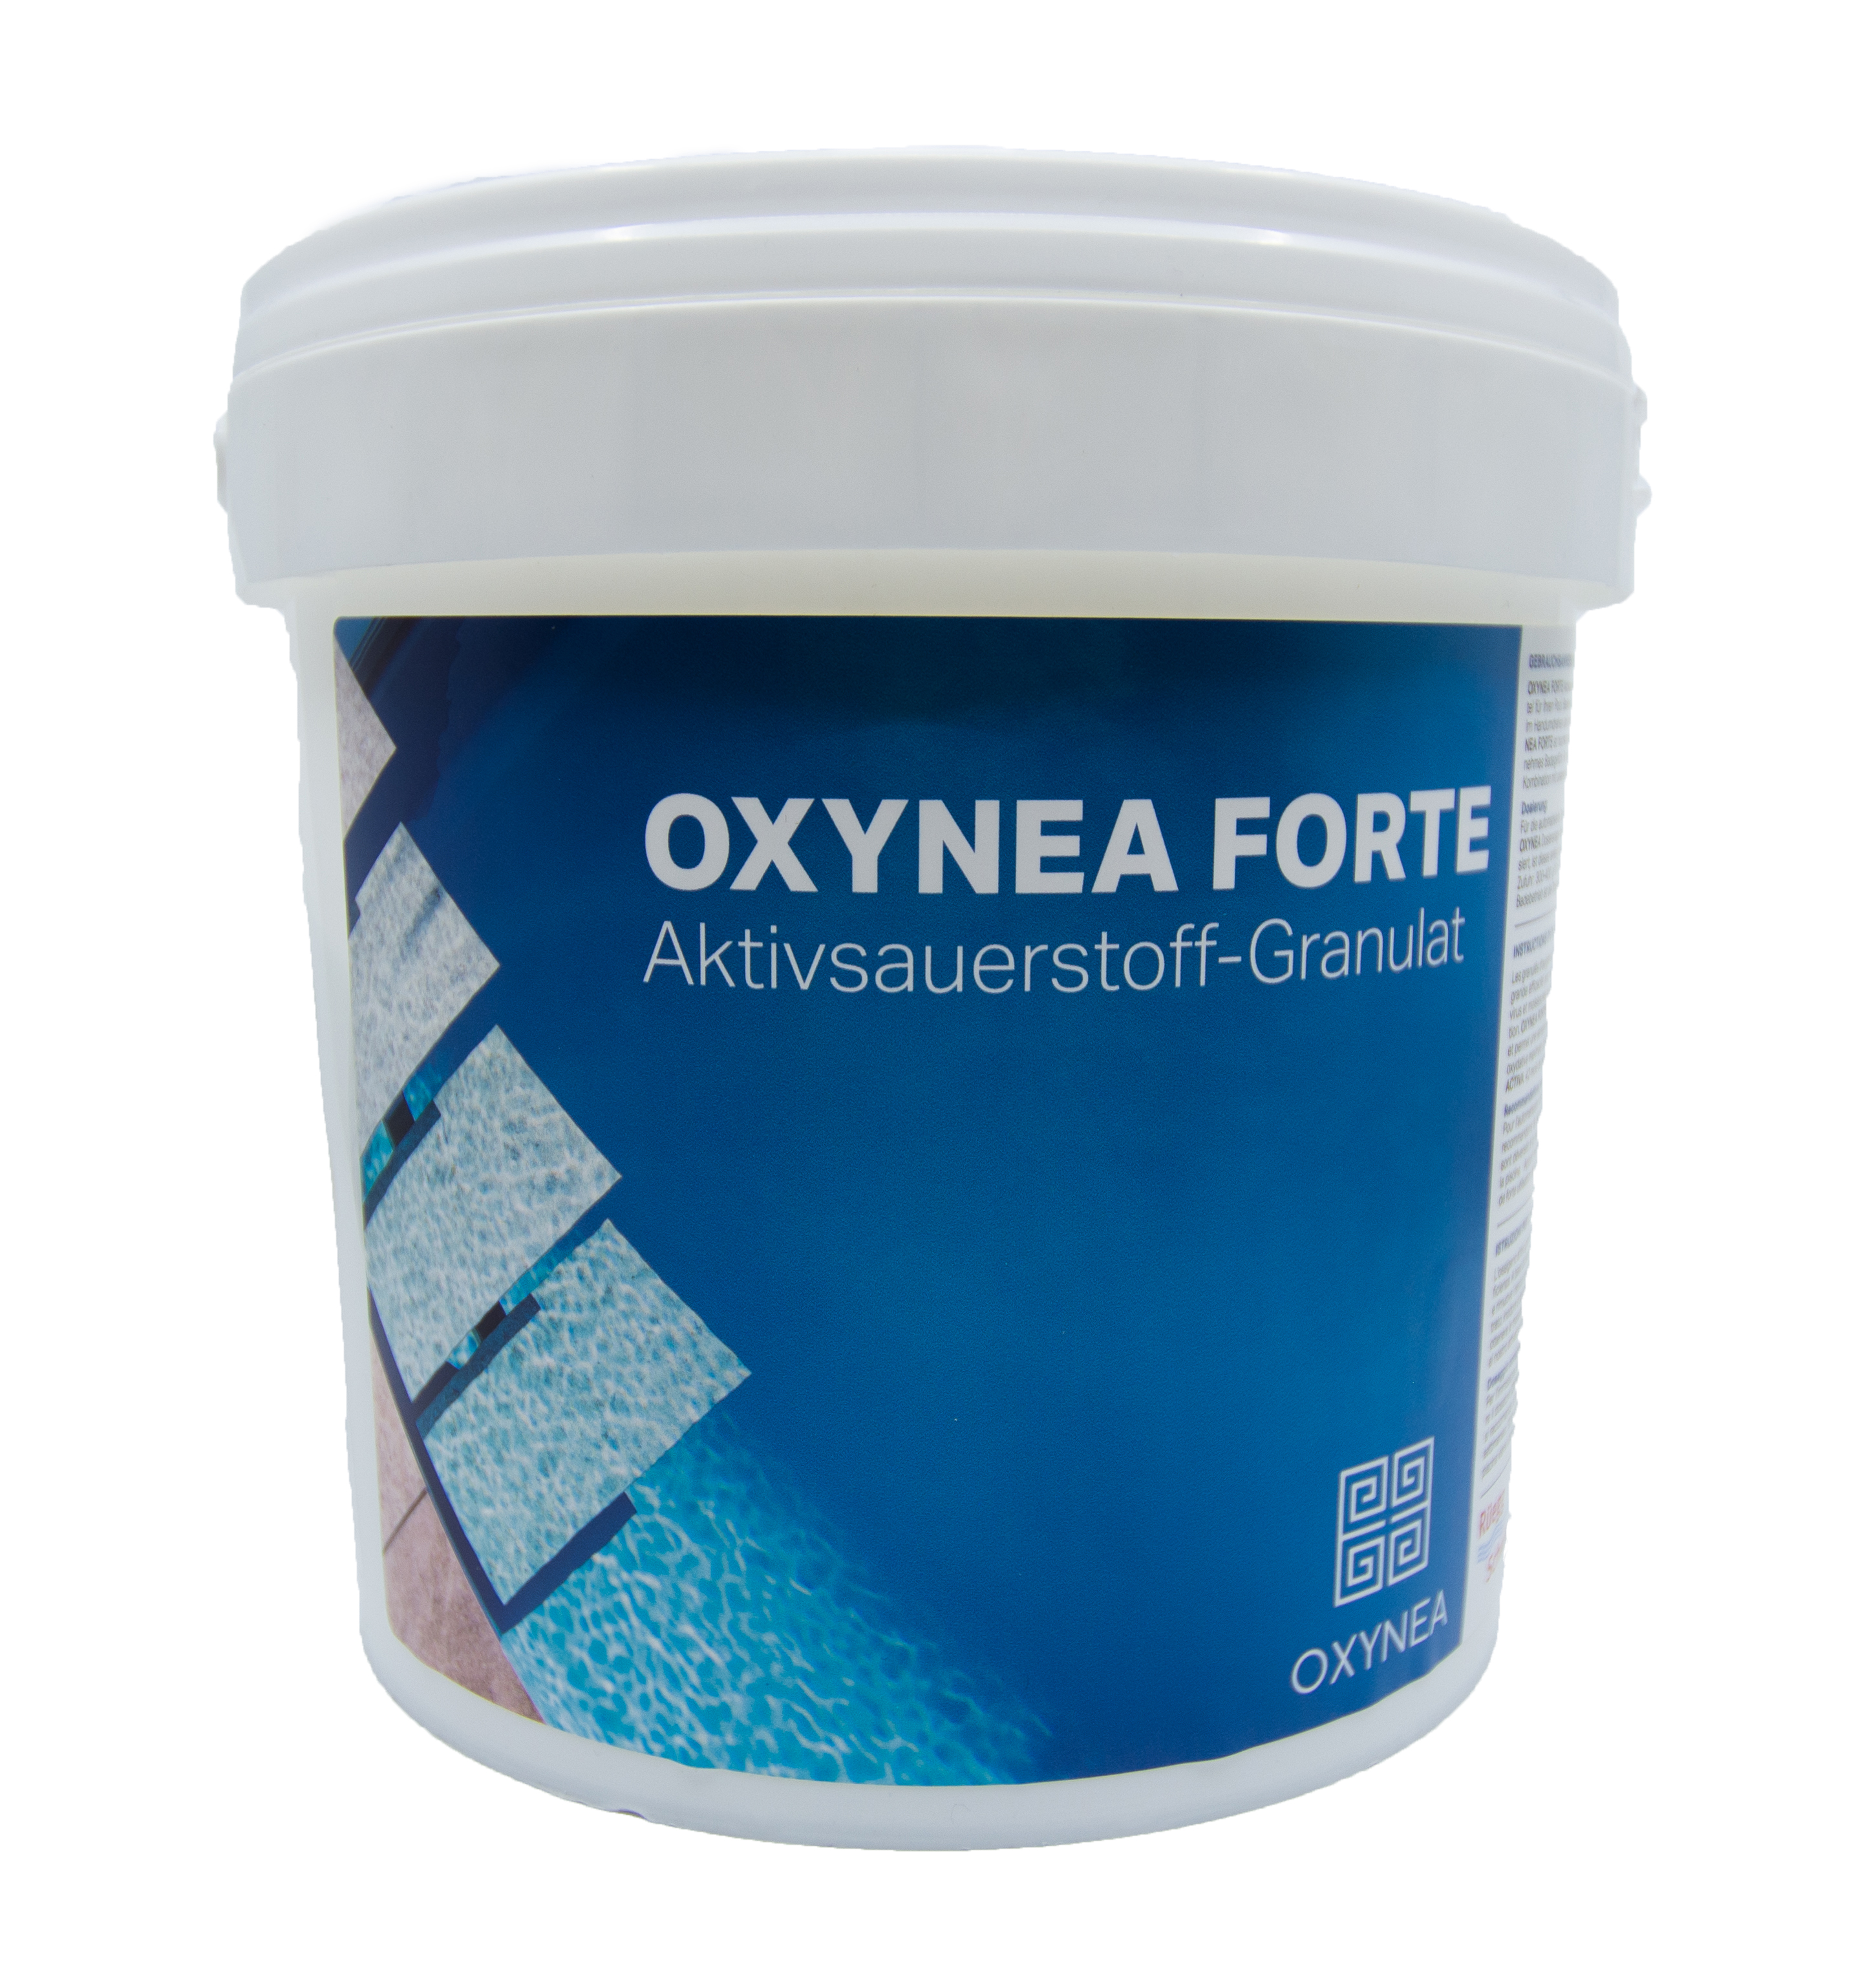 OXYNEA Forte - Aktivsauerstoff Granulat, 5 kg